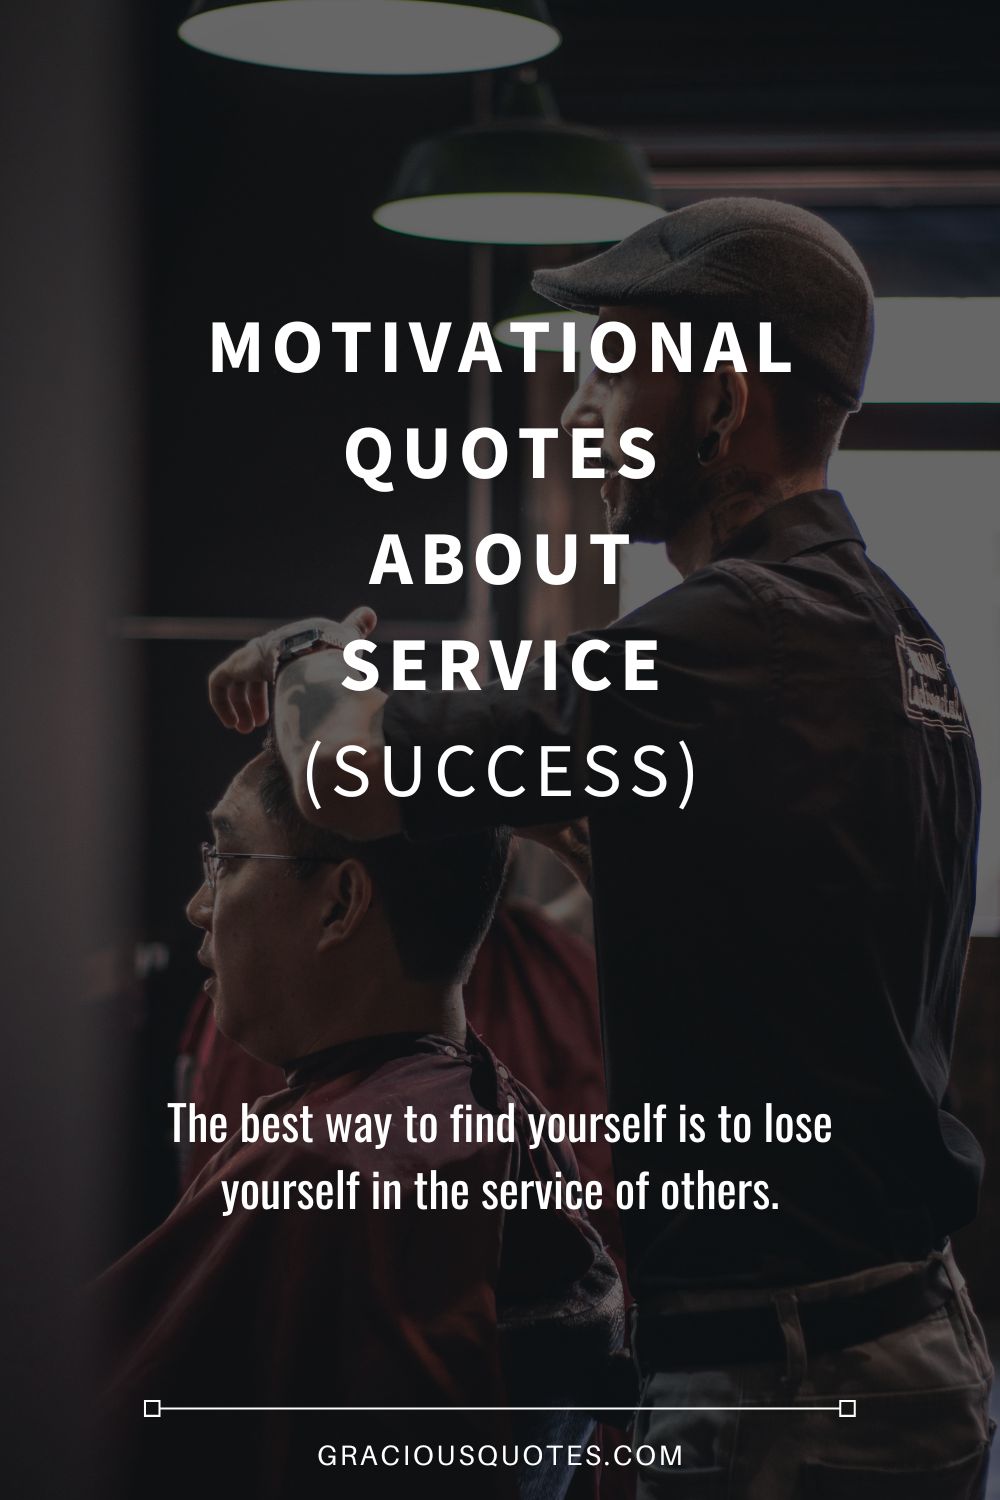 Motivational Quotes About Service (SUCCESS) - Gracious Quotes